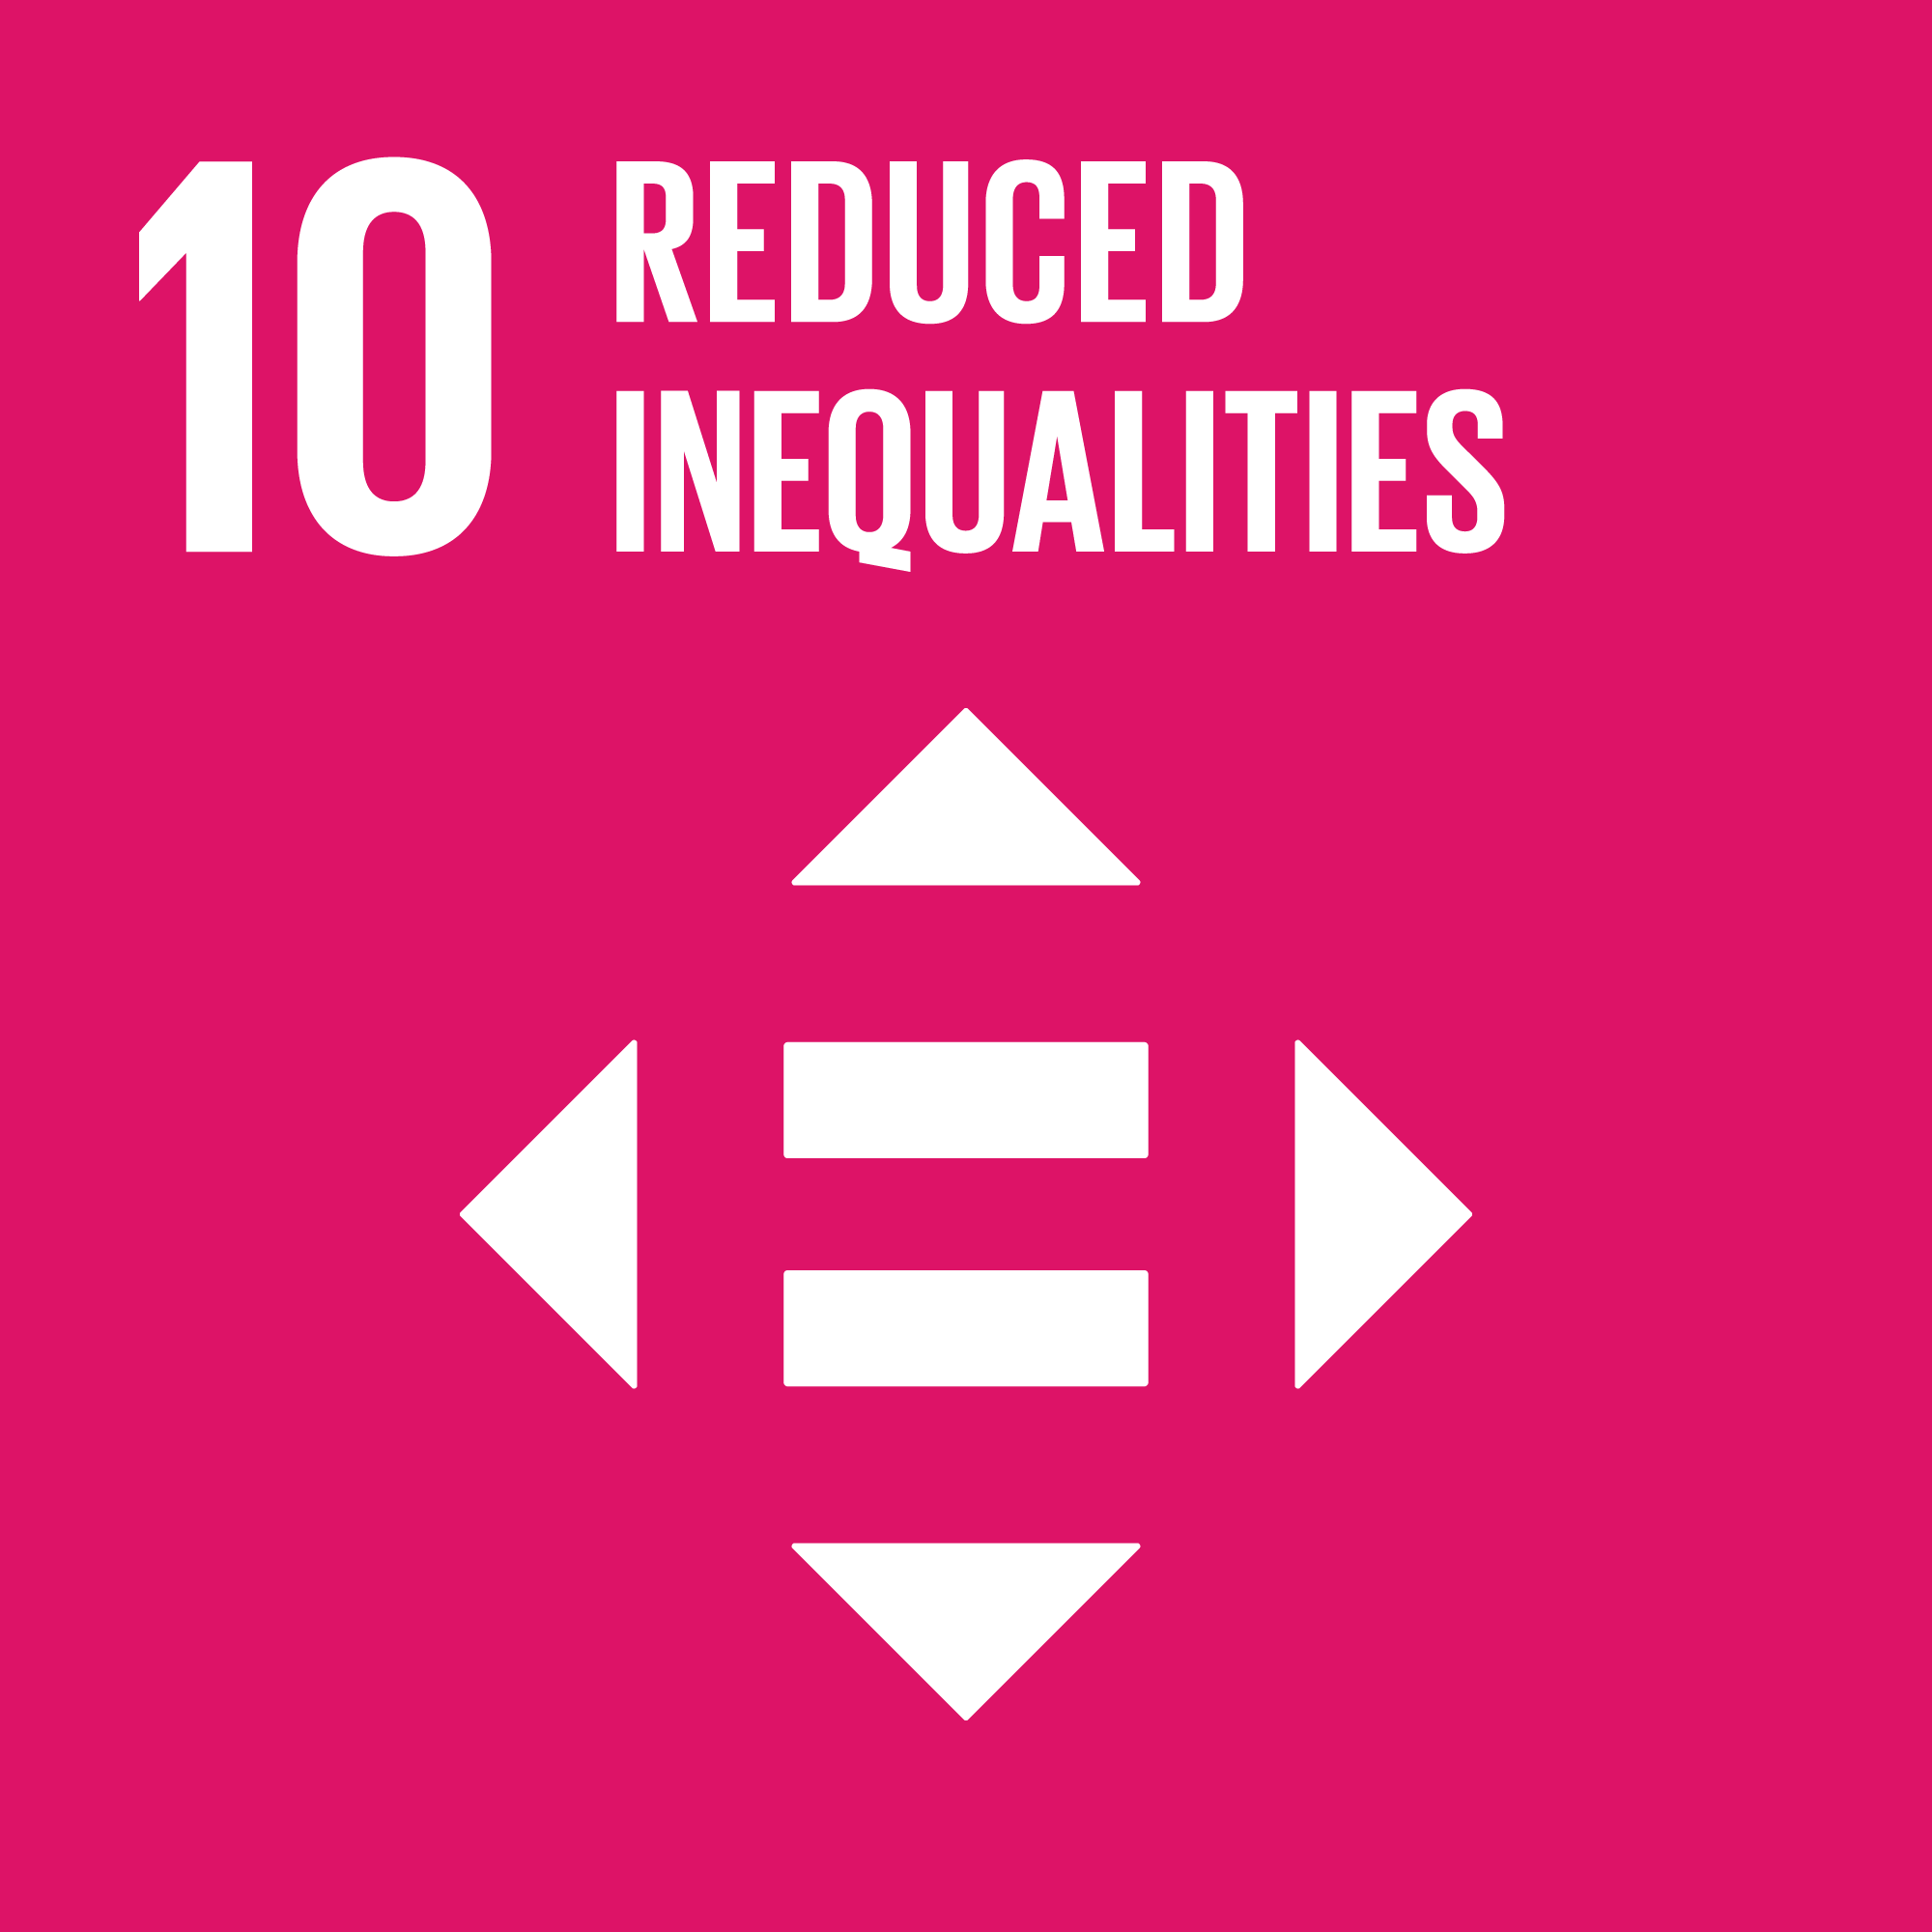 Agenda 2030 goal number 10: reduced inequalities